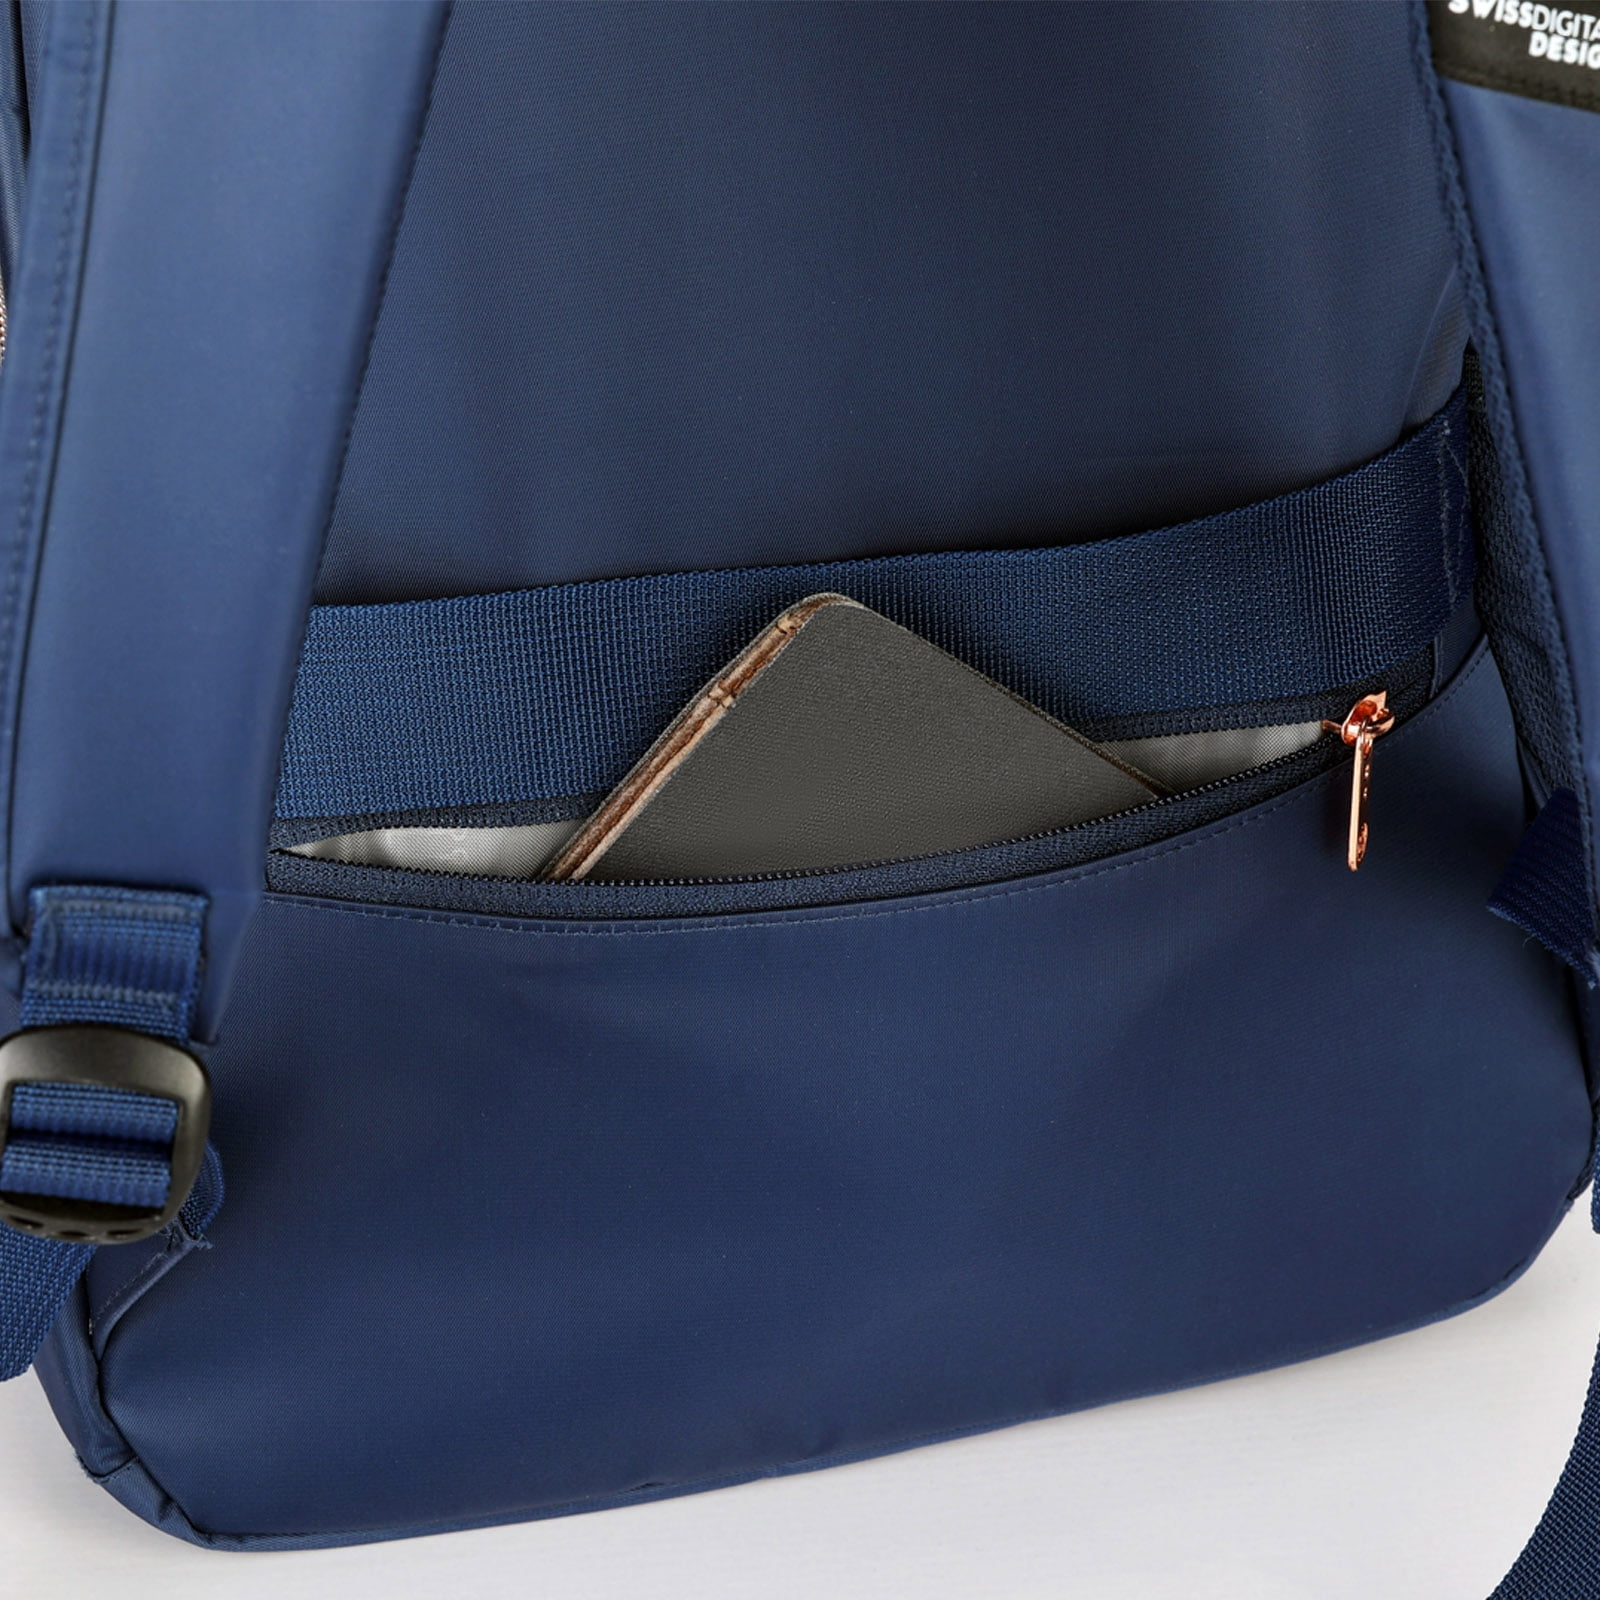 Swissdigital Remi Laptop Backpack w/ Smart USB Charge Port, Padded Laptop Pocket - Black